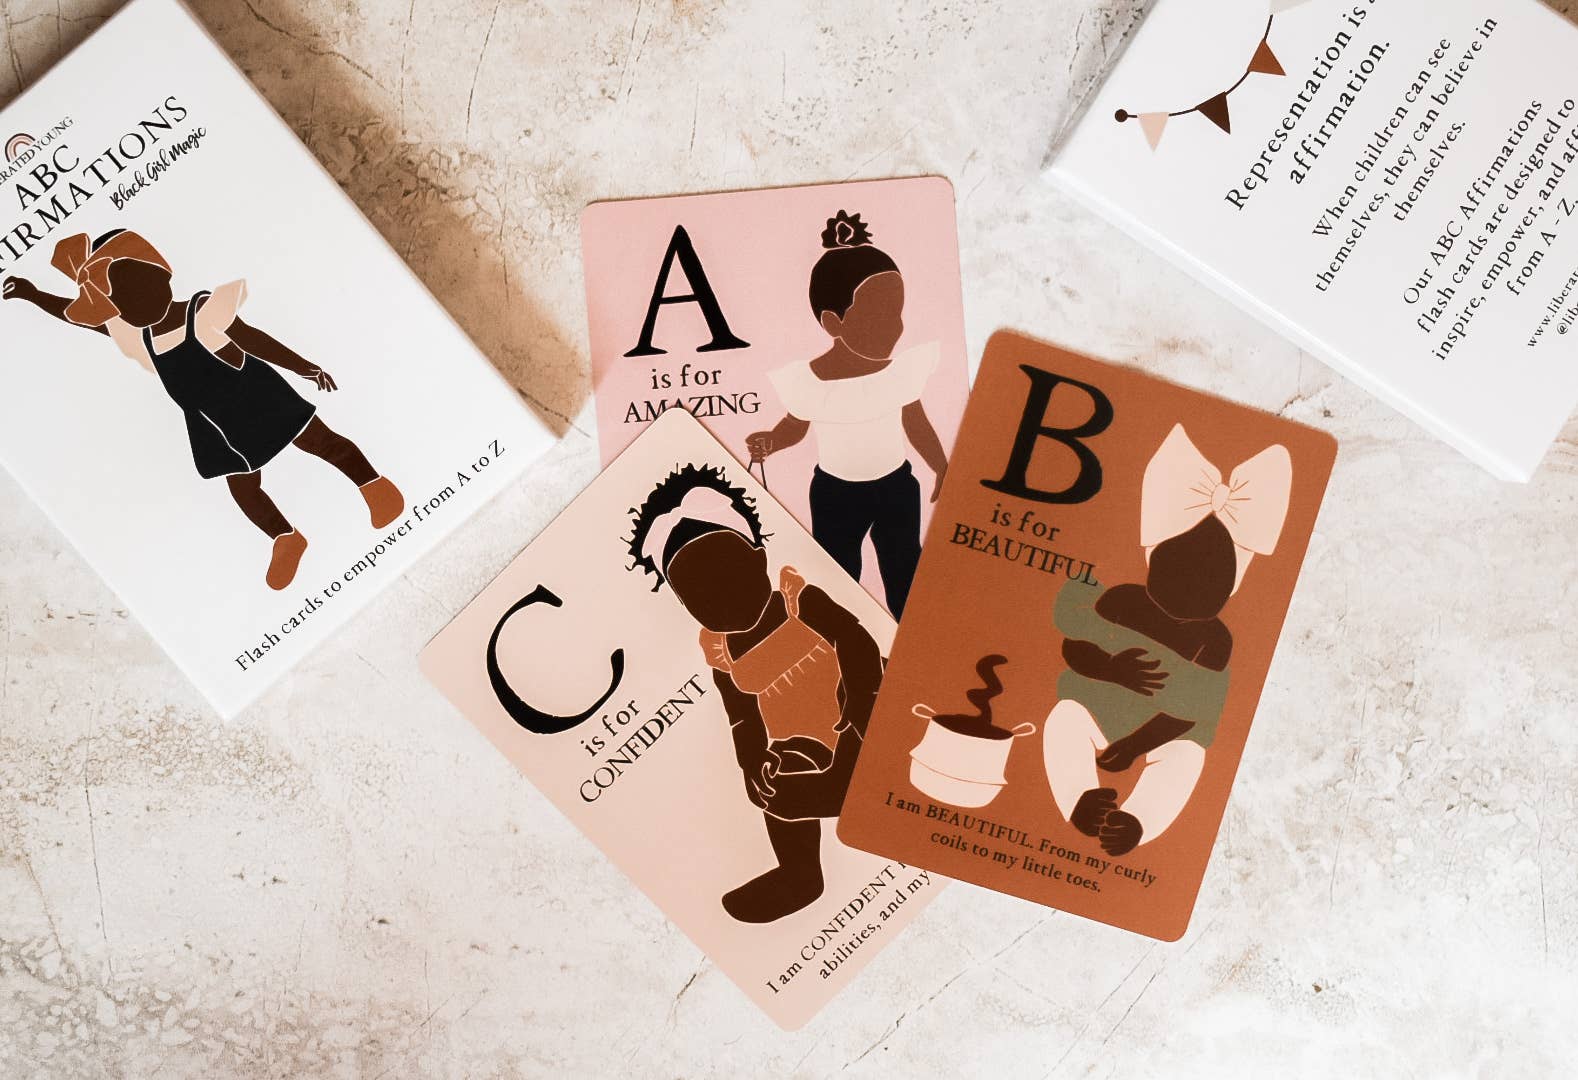 ABC Affirmations Flash Cards - Black Girl Magic